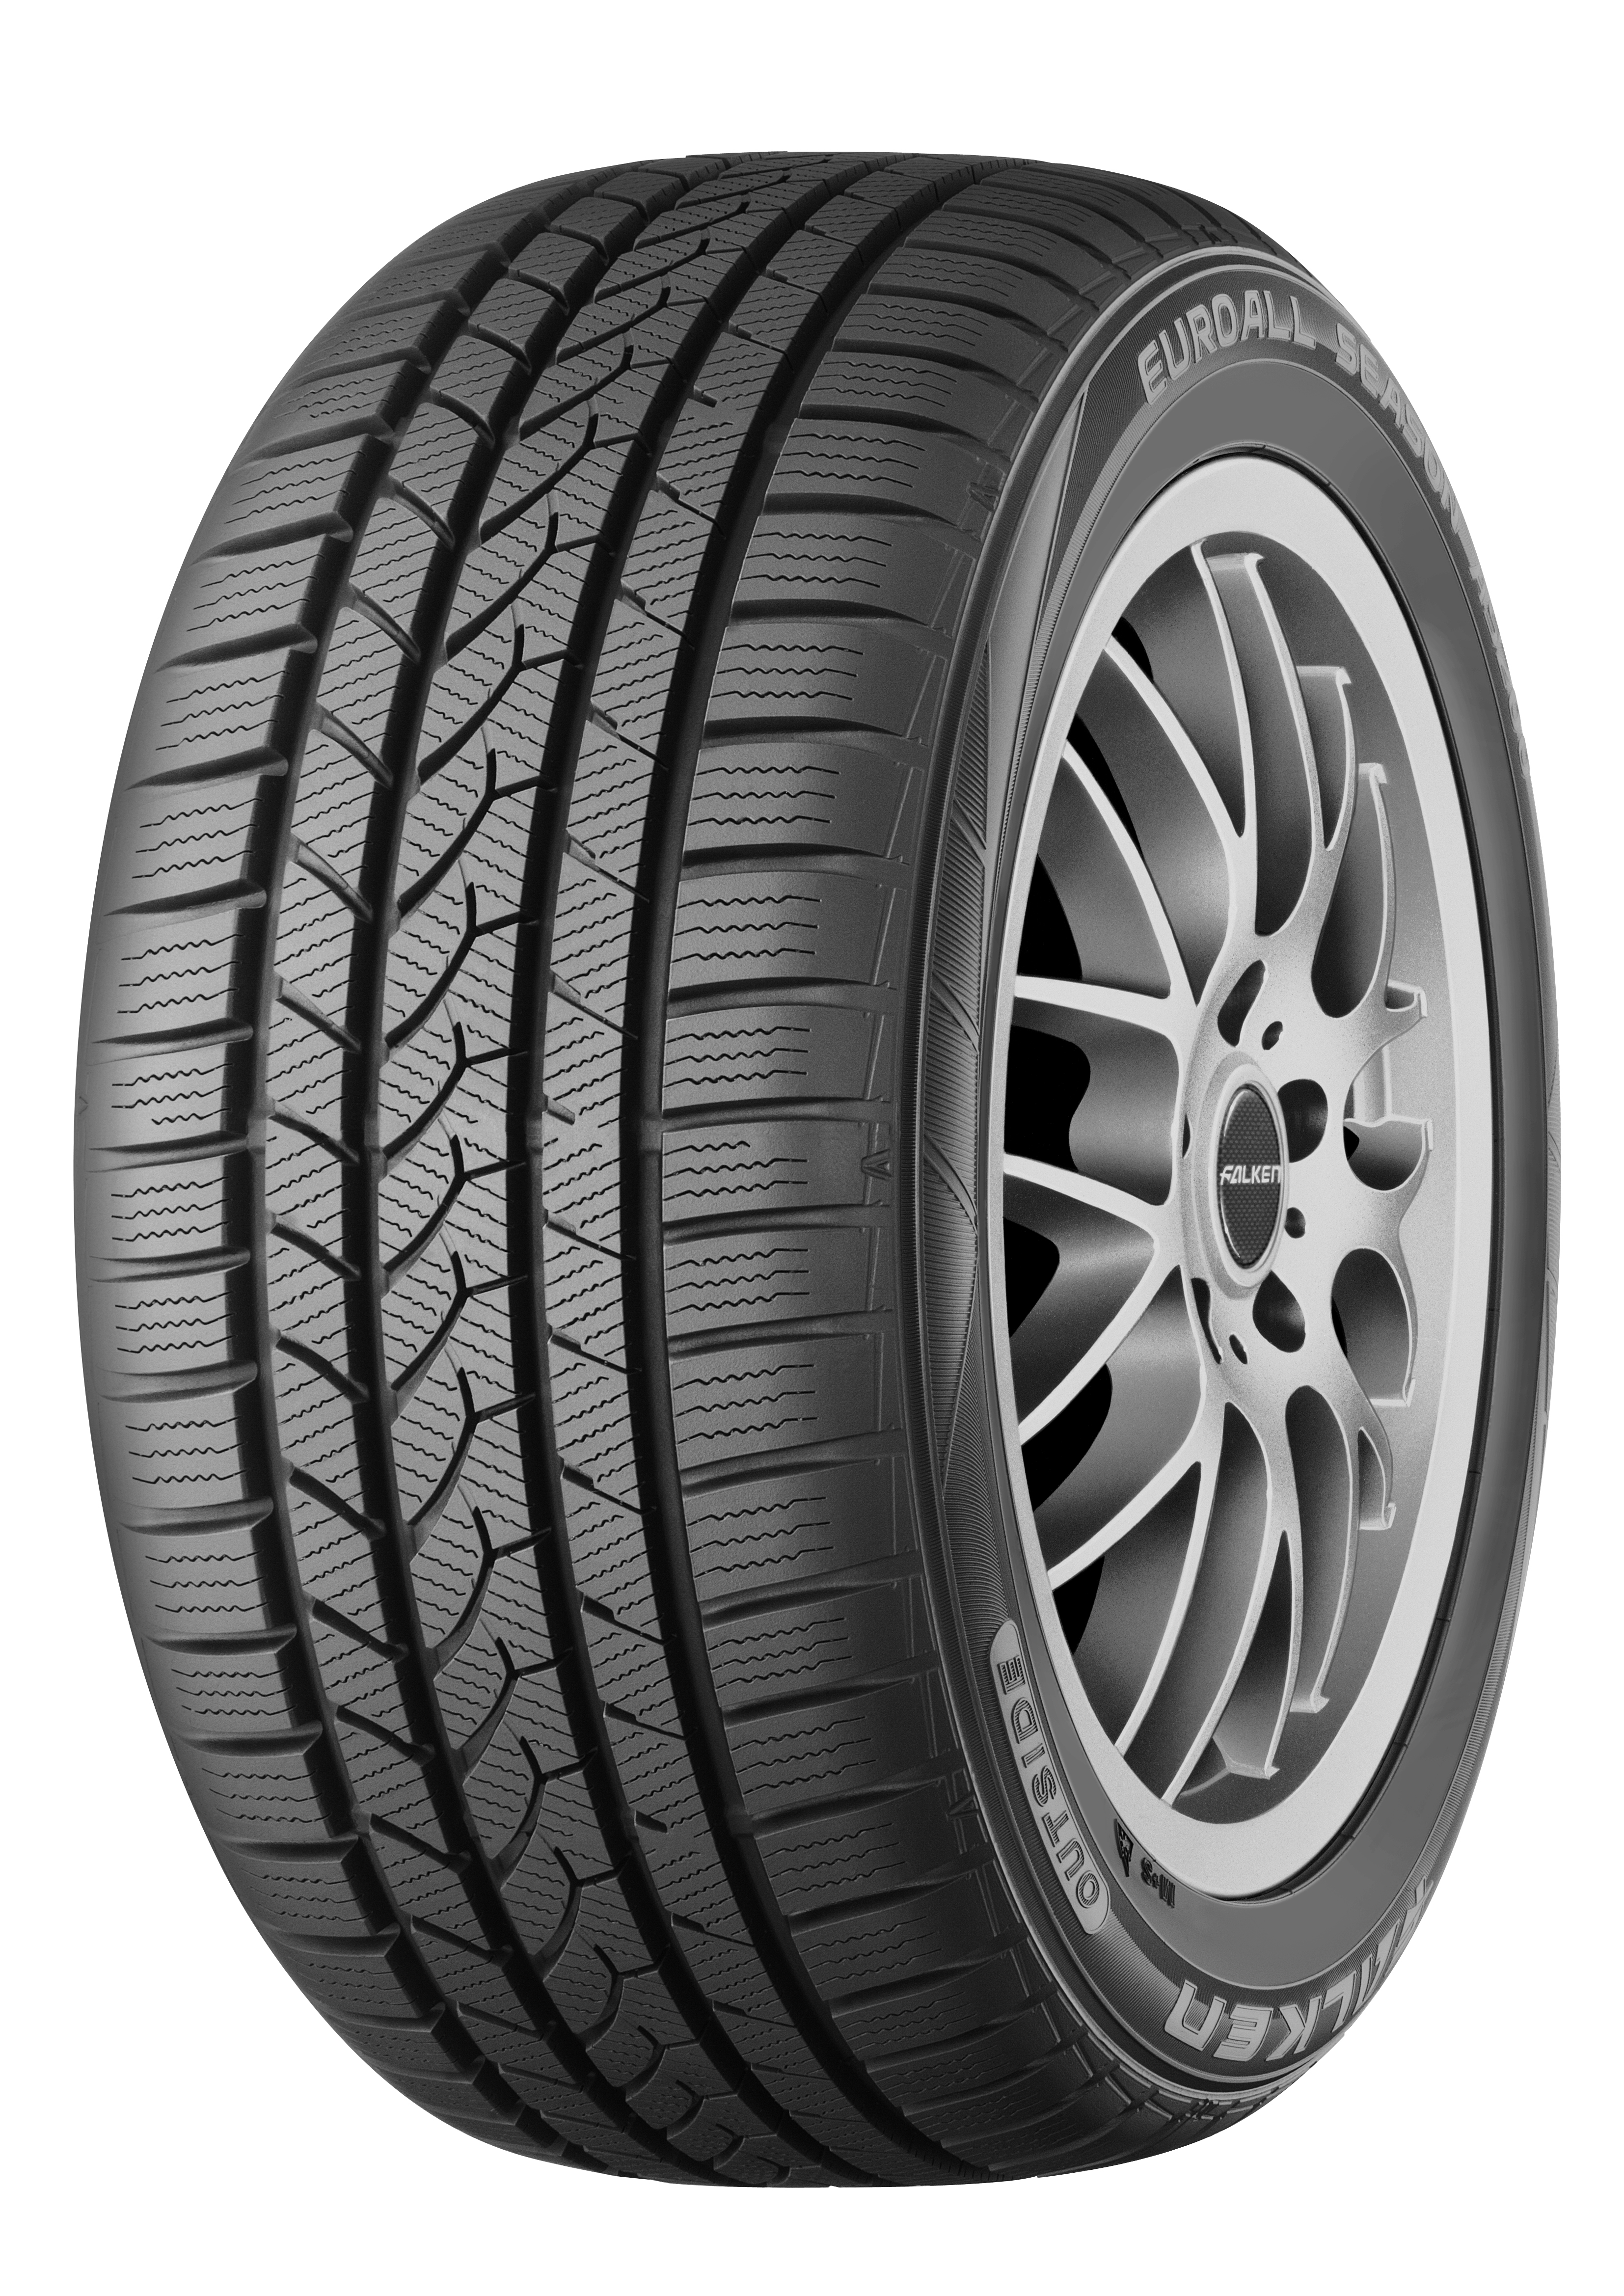 Falken says Euroall AS200 a ‘sensible’ UK alternative to ‘pricey’ winter tyres